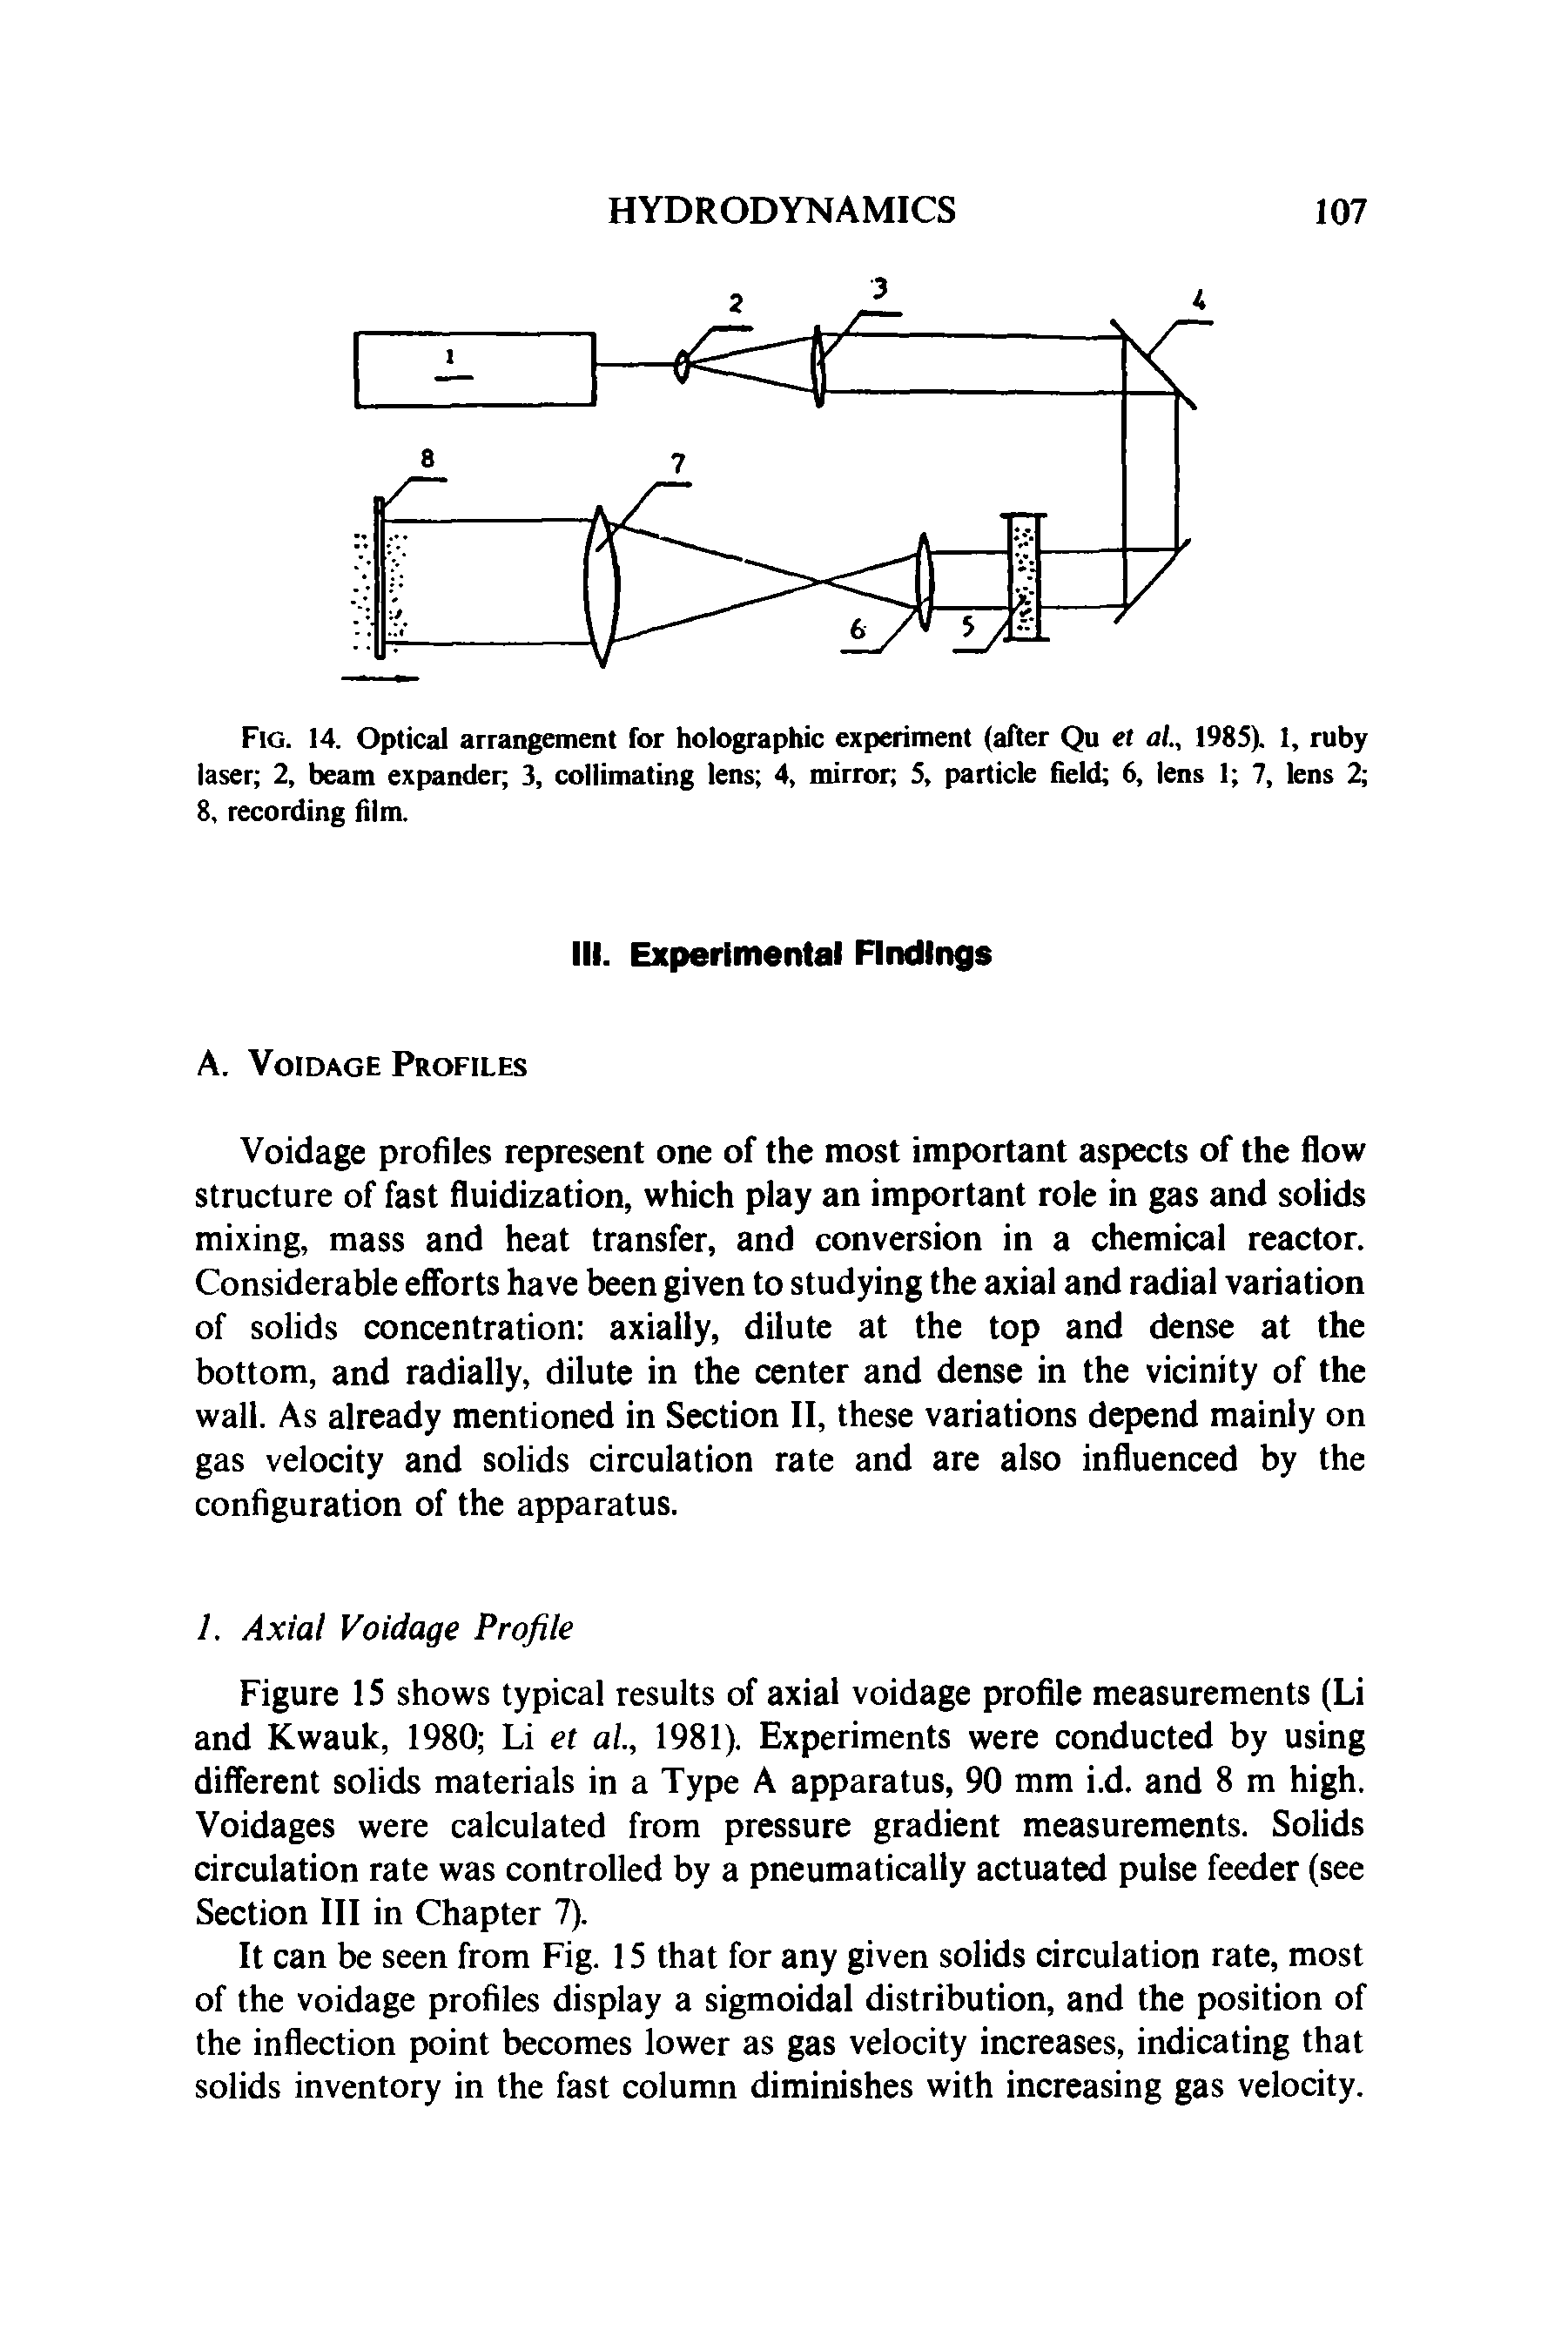 Fig. 14. Optical arrangement for holographic experiment (after Qu et al., 1985). 1, ruby laser 2, beam expander 3, collimating lens 4, mirror 5, particle field 6, lens 1 7, lens 2 8, recording film.